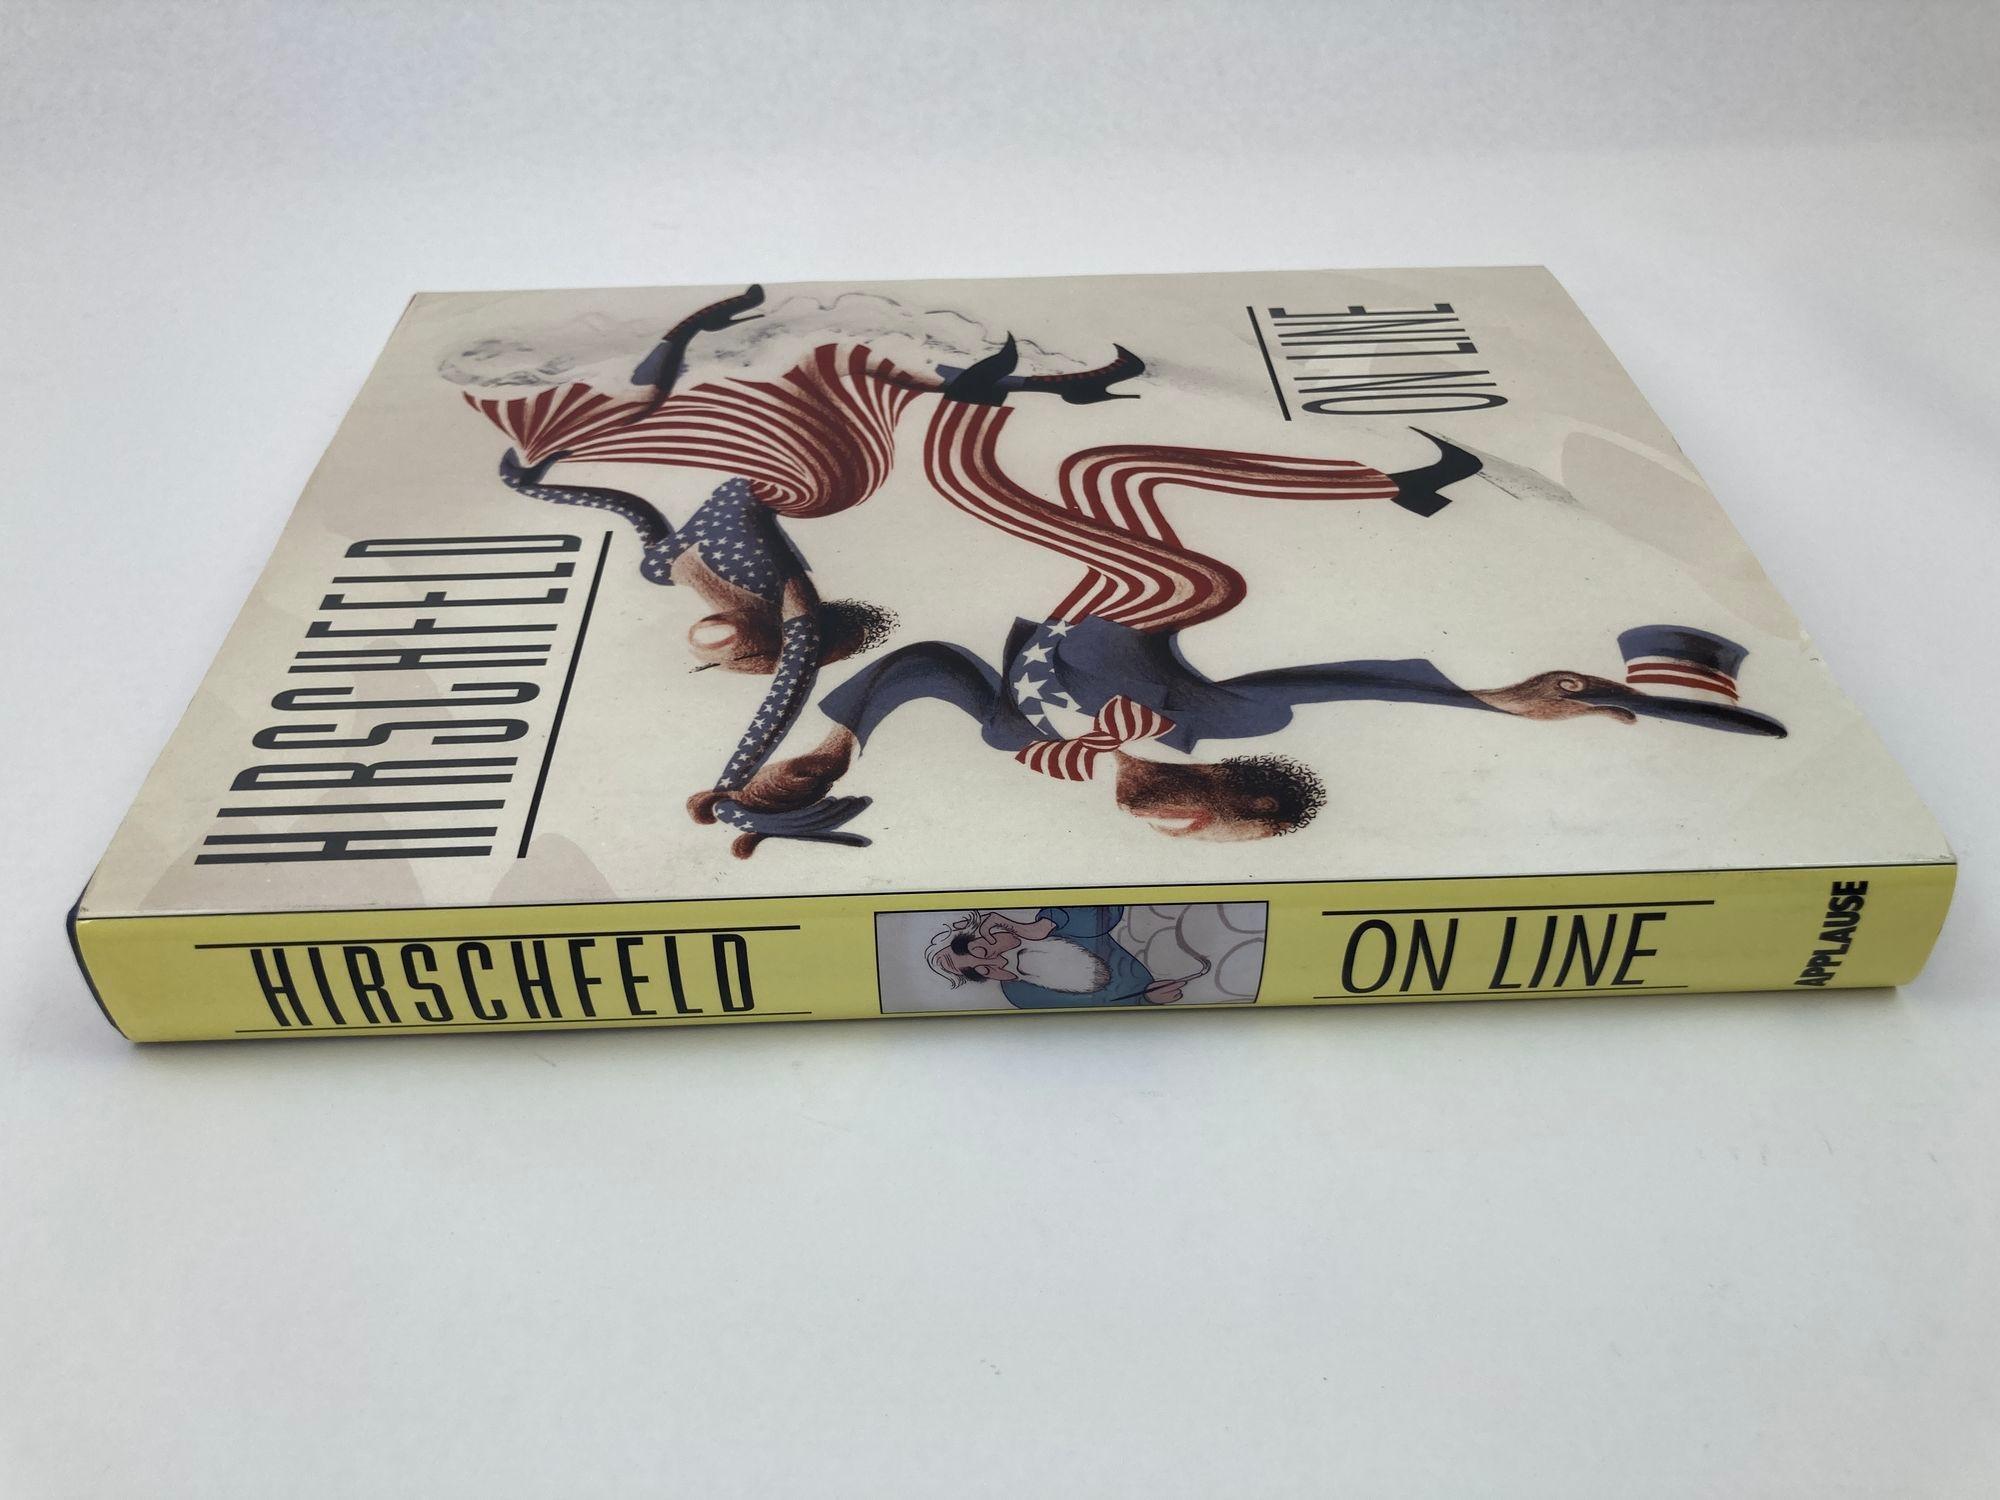 Hirschfeld On Line Hardcover Book by Al Hirschfeld For Sale 10